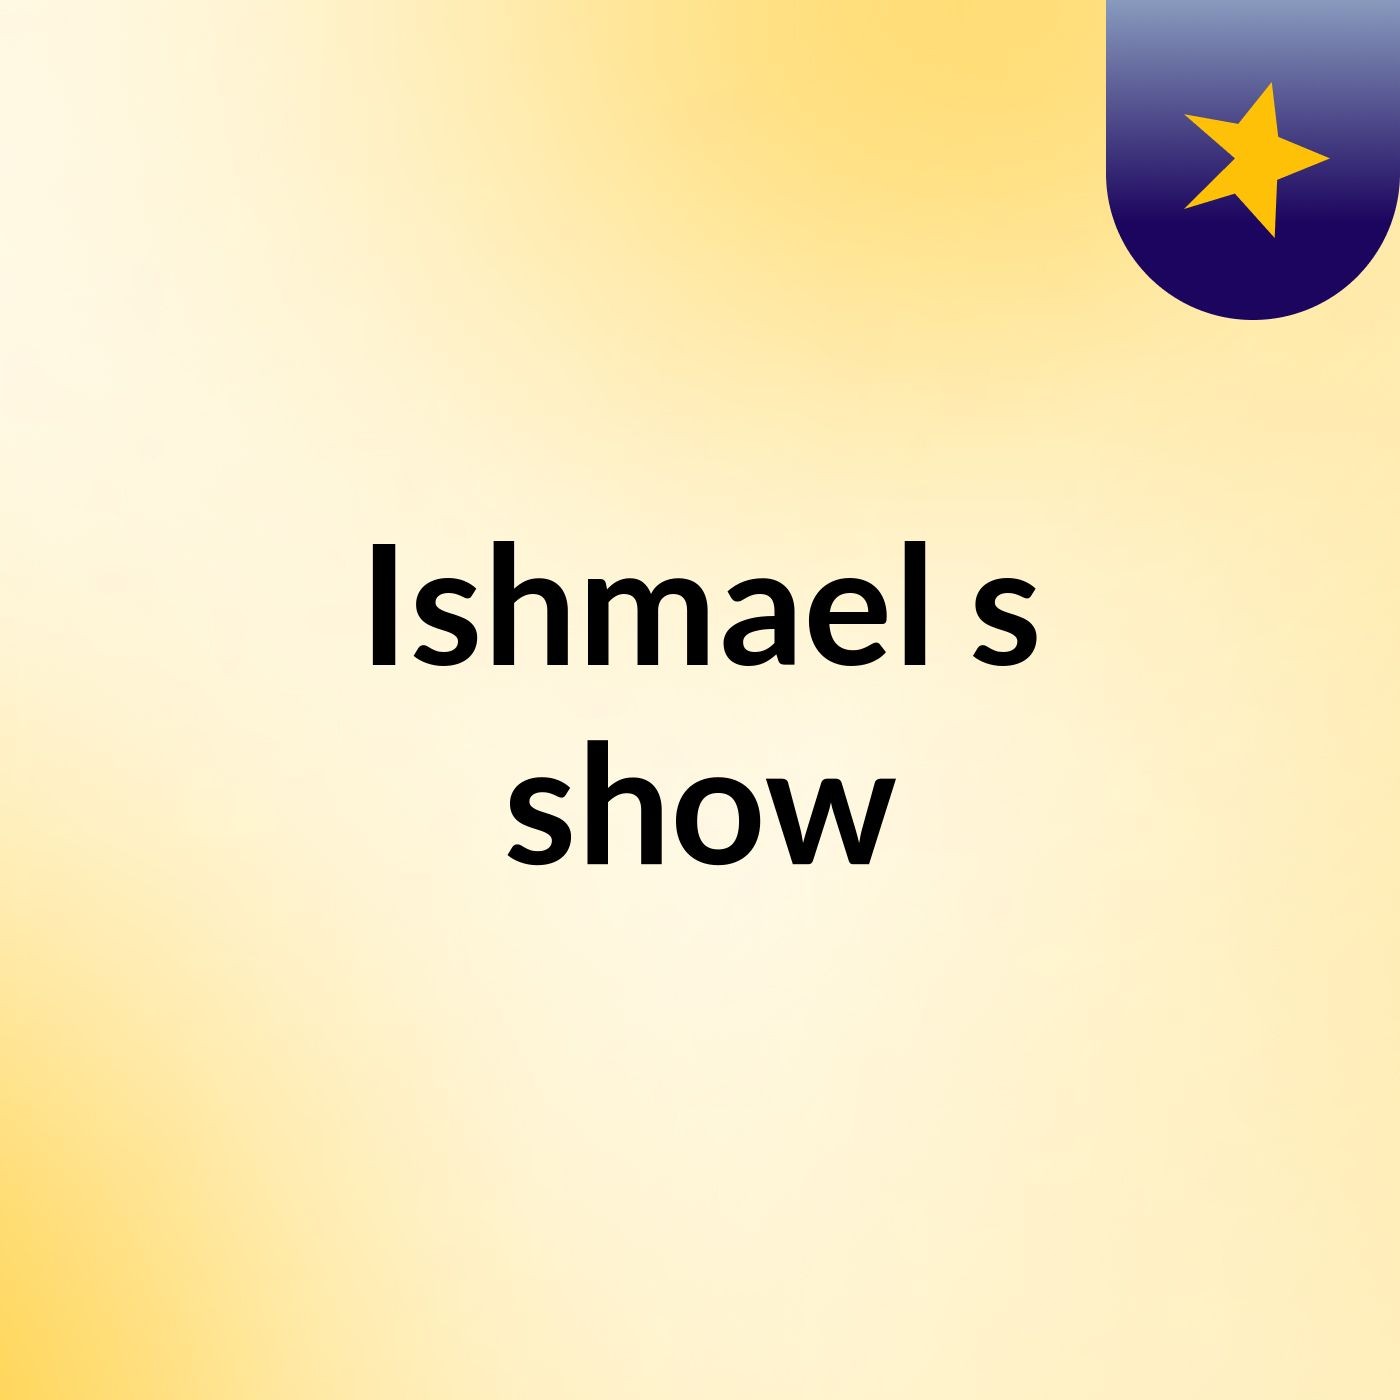 Ishmael's show